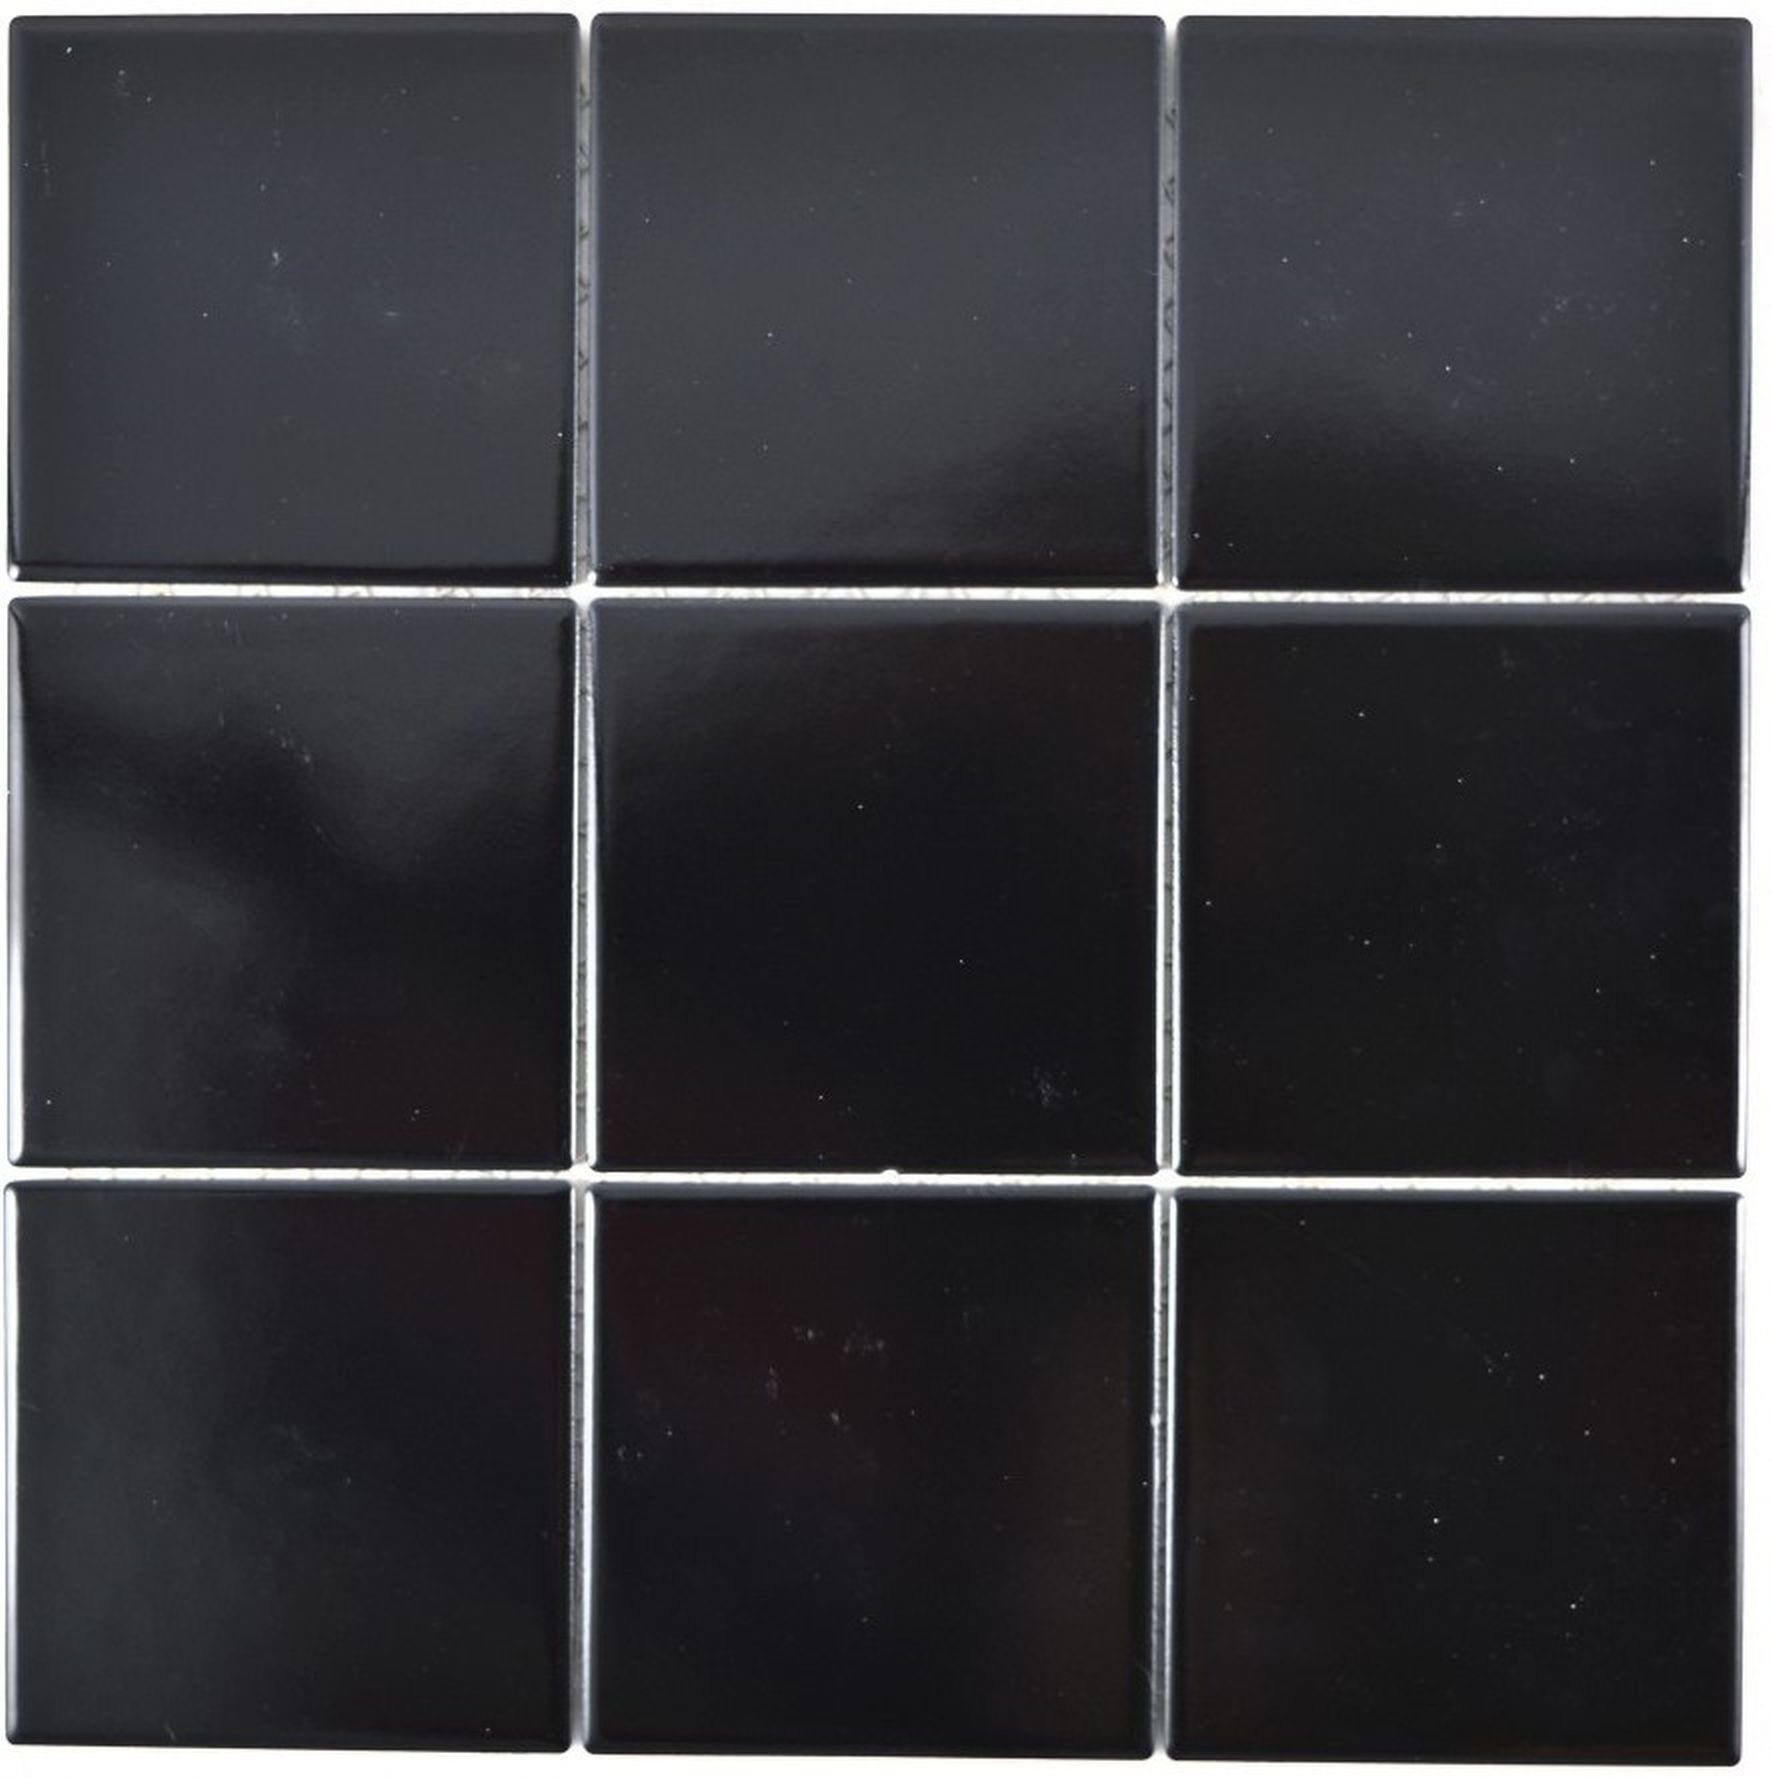 Mosani Mosaikfliesen Quadratisches Keramikmosaik Mosaikfliesen schwarz matt / 10 Matten